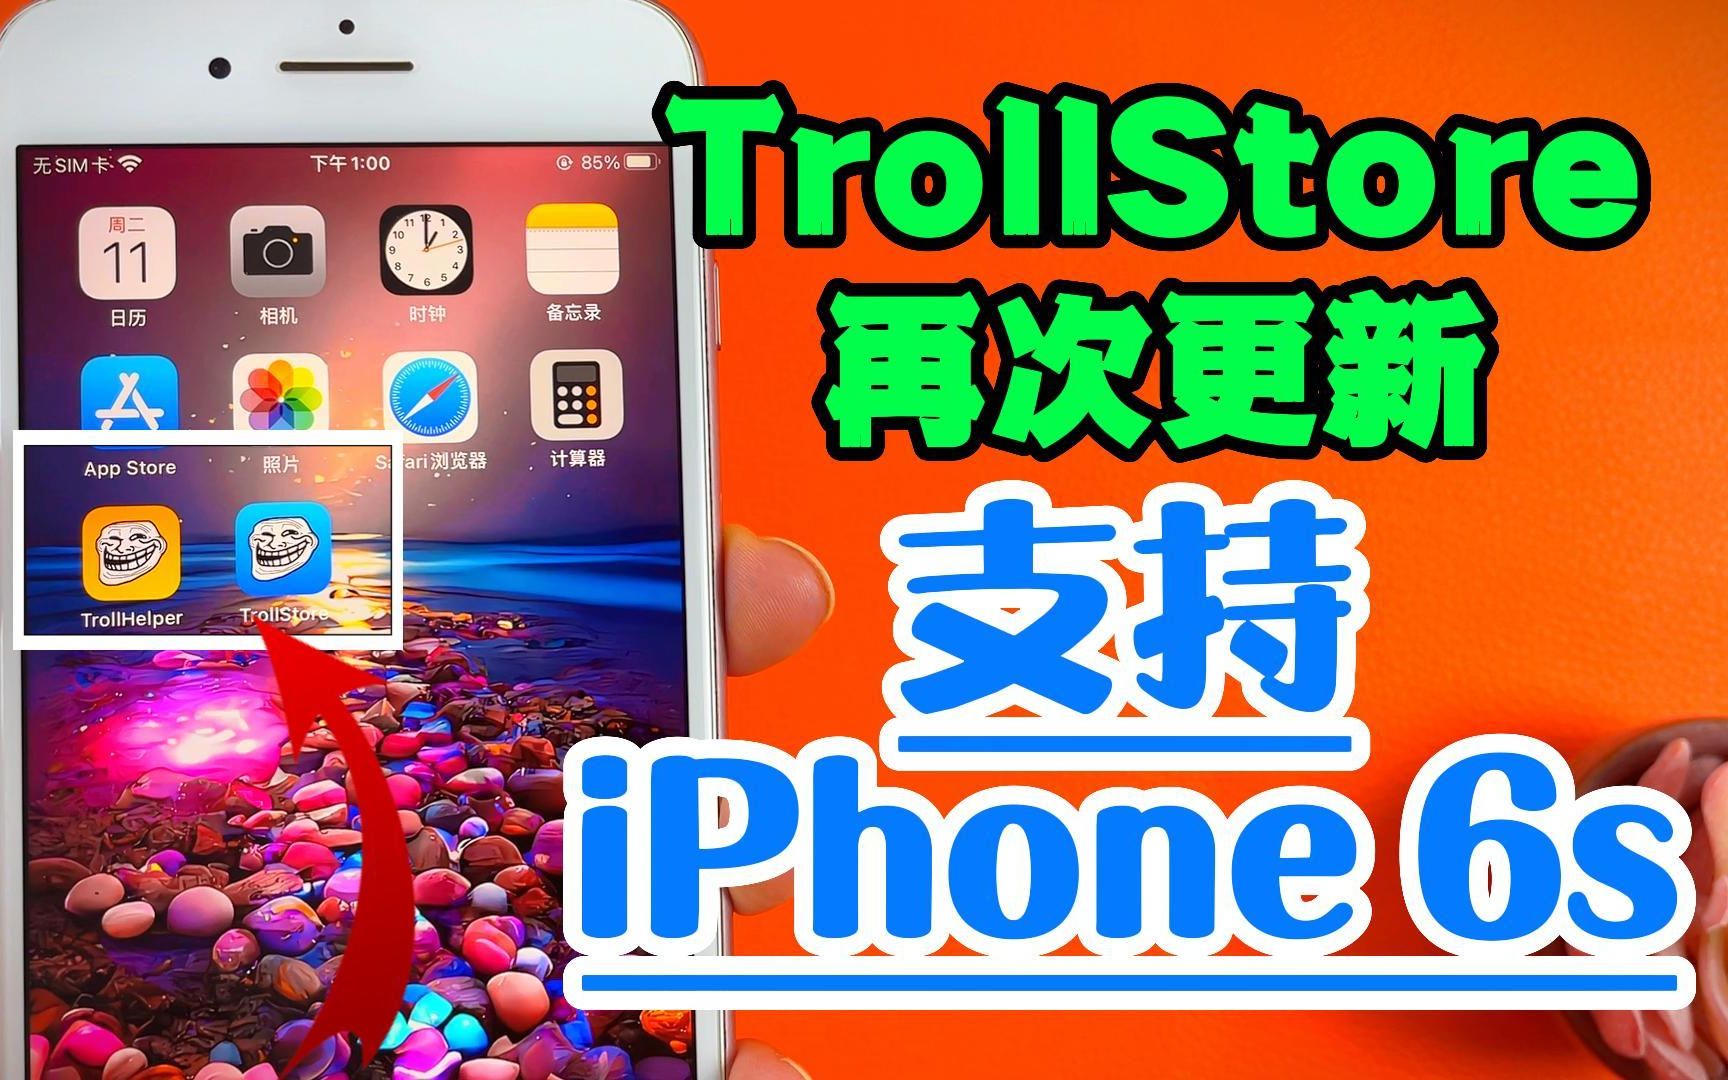 Trollstore巨魔商店官网 - 下载IOS永久签名工具